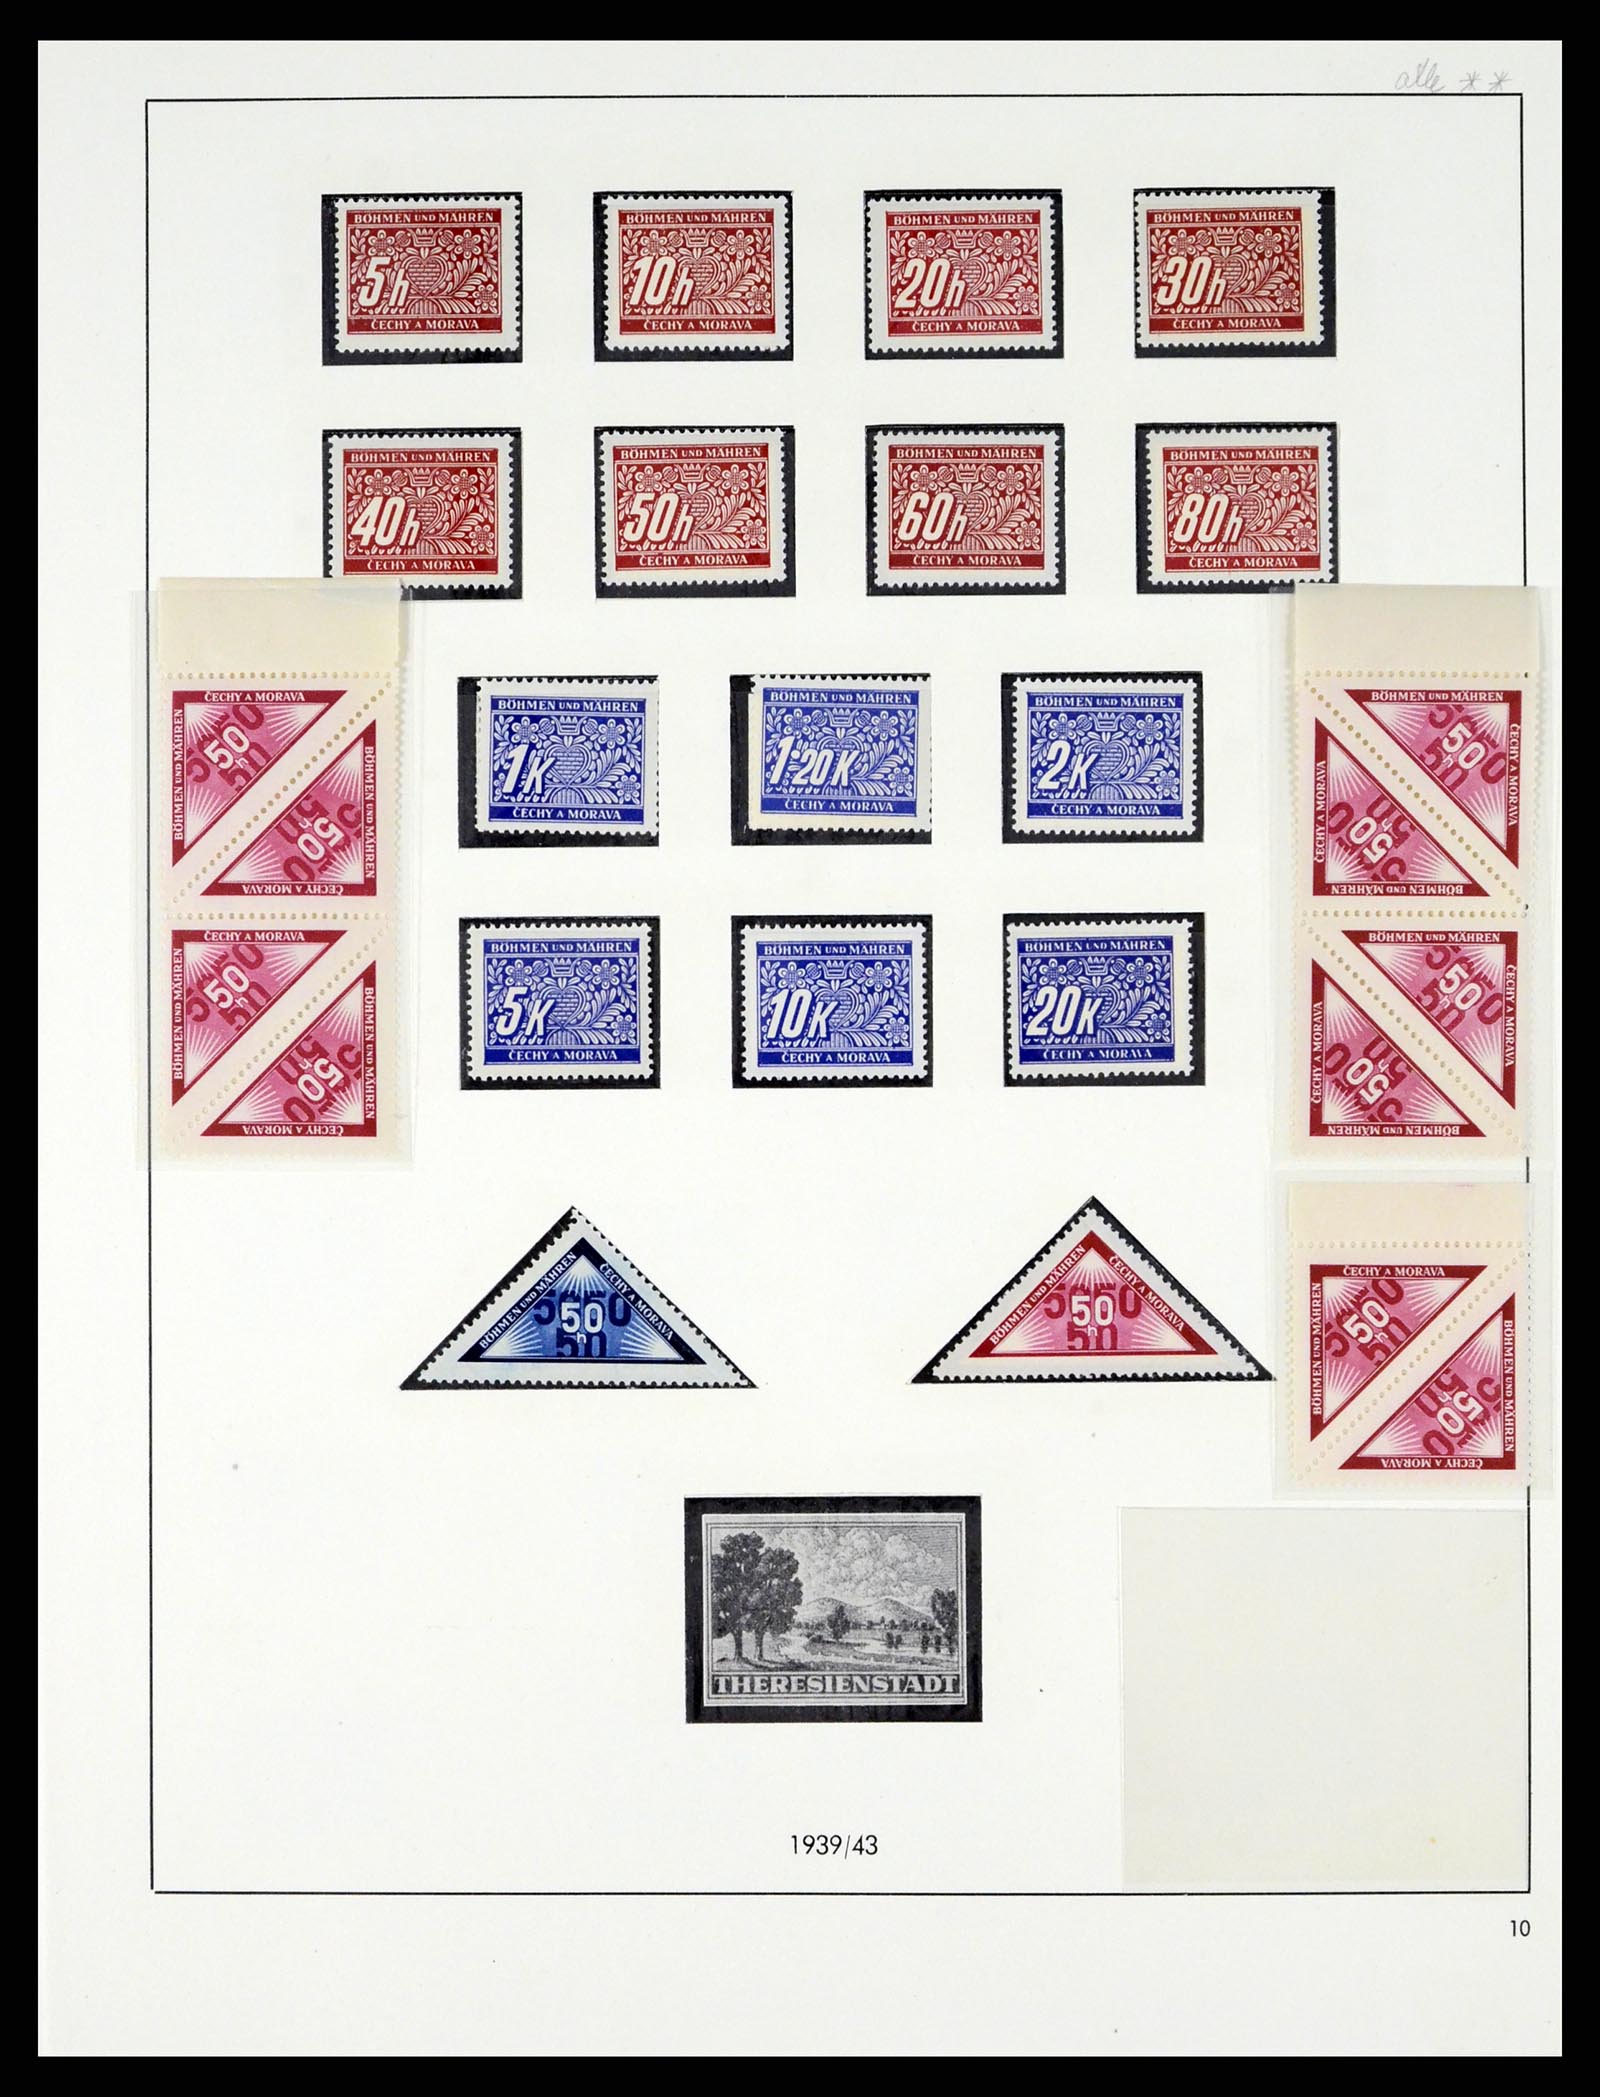 37535 037 - Stamp collection 37535 German occupation second worldwar 1939-1945.